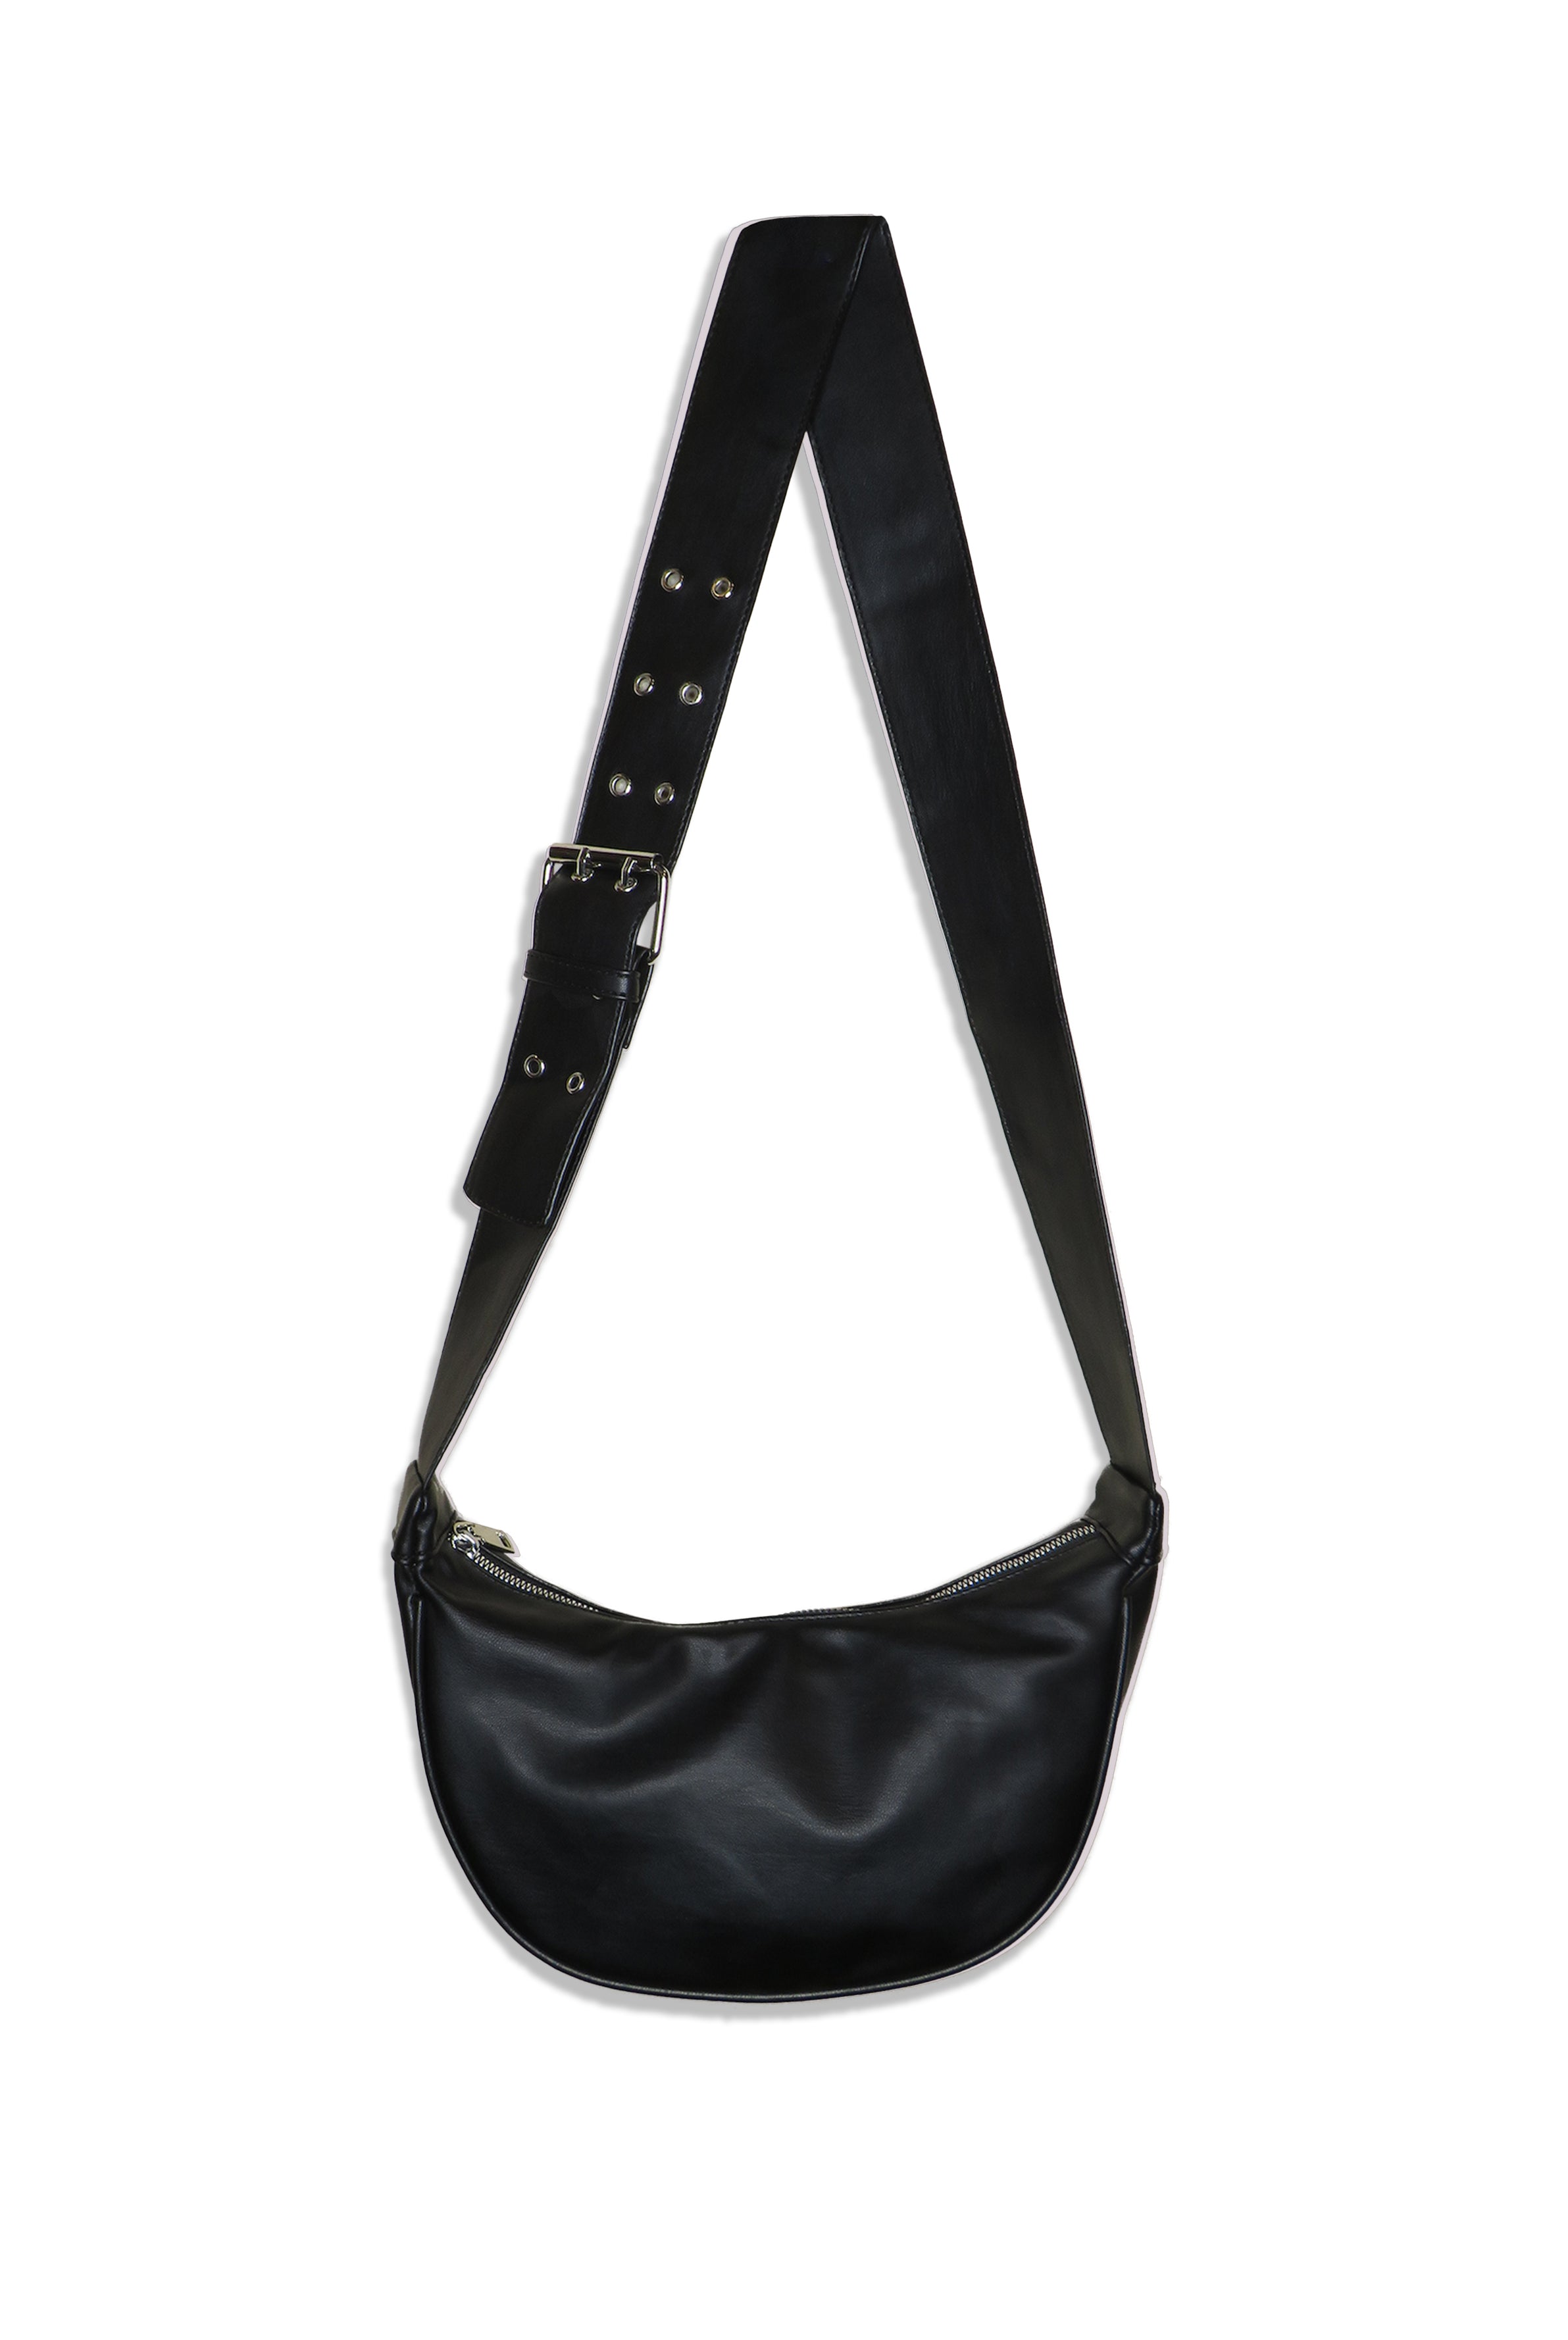 Chunky Faux Leather Buckle Sling Bag | Black Crossbody Bag | Women's Bag| My Accessories London Bag